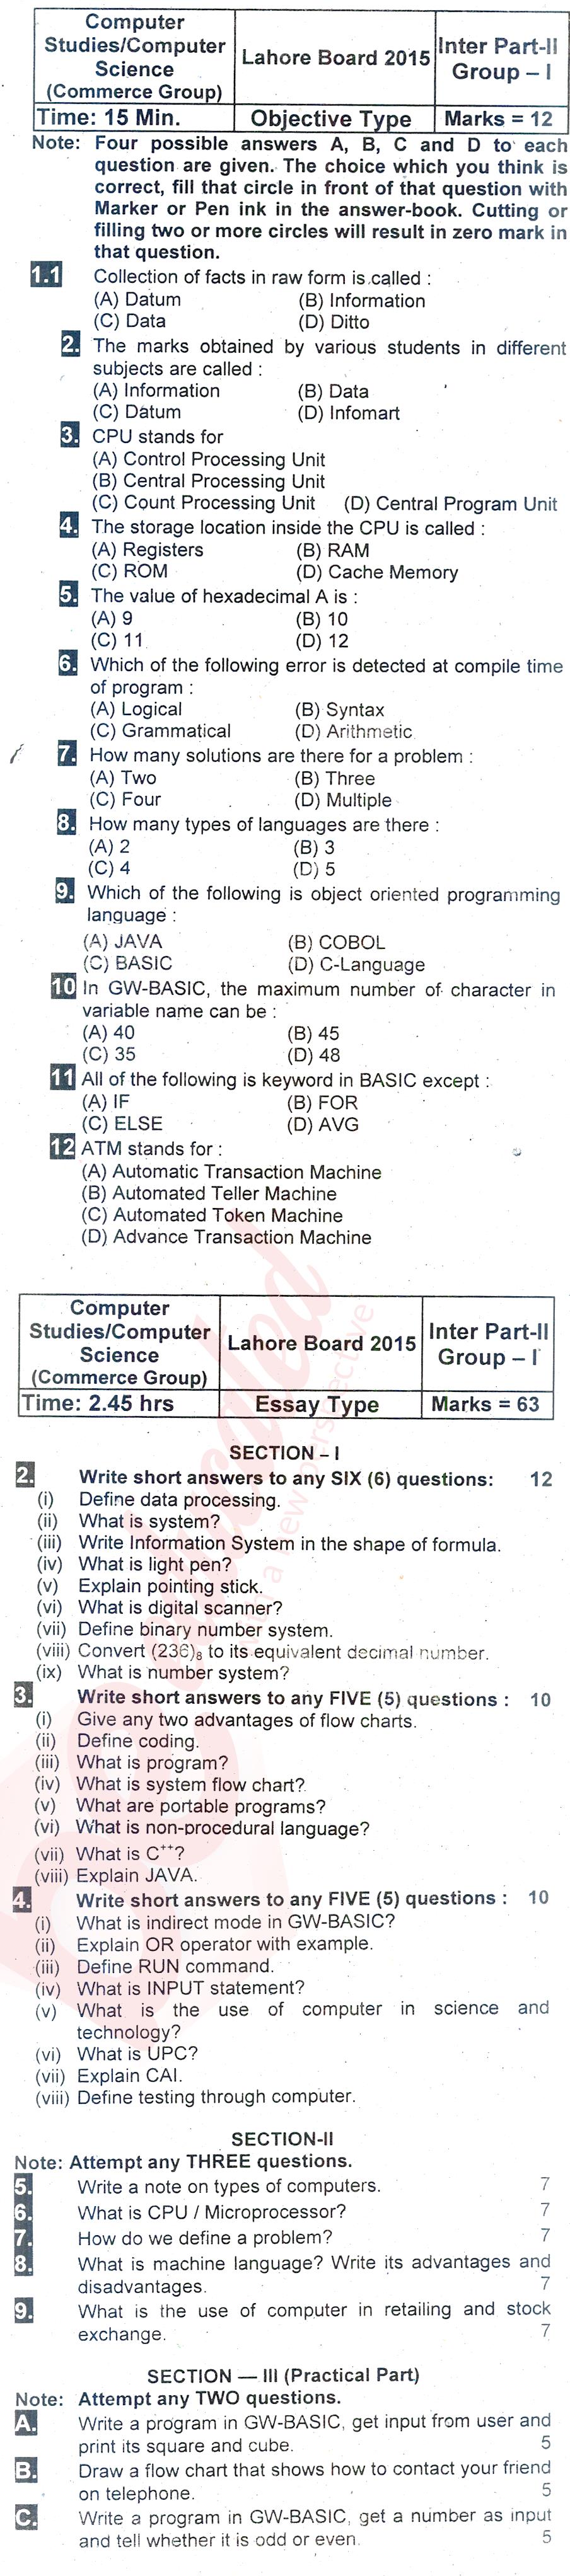 Computer Science ICOM Part 2 Past Paper Group 1 BISE Lahore 2015